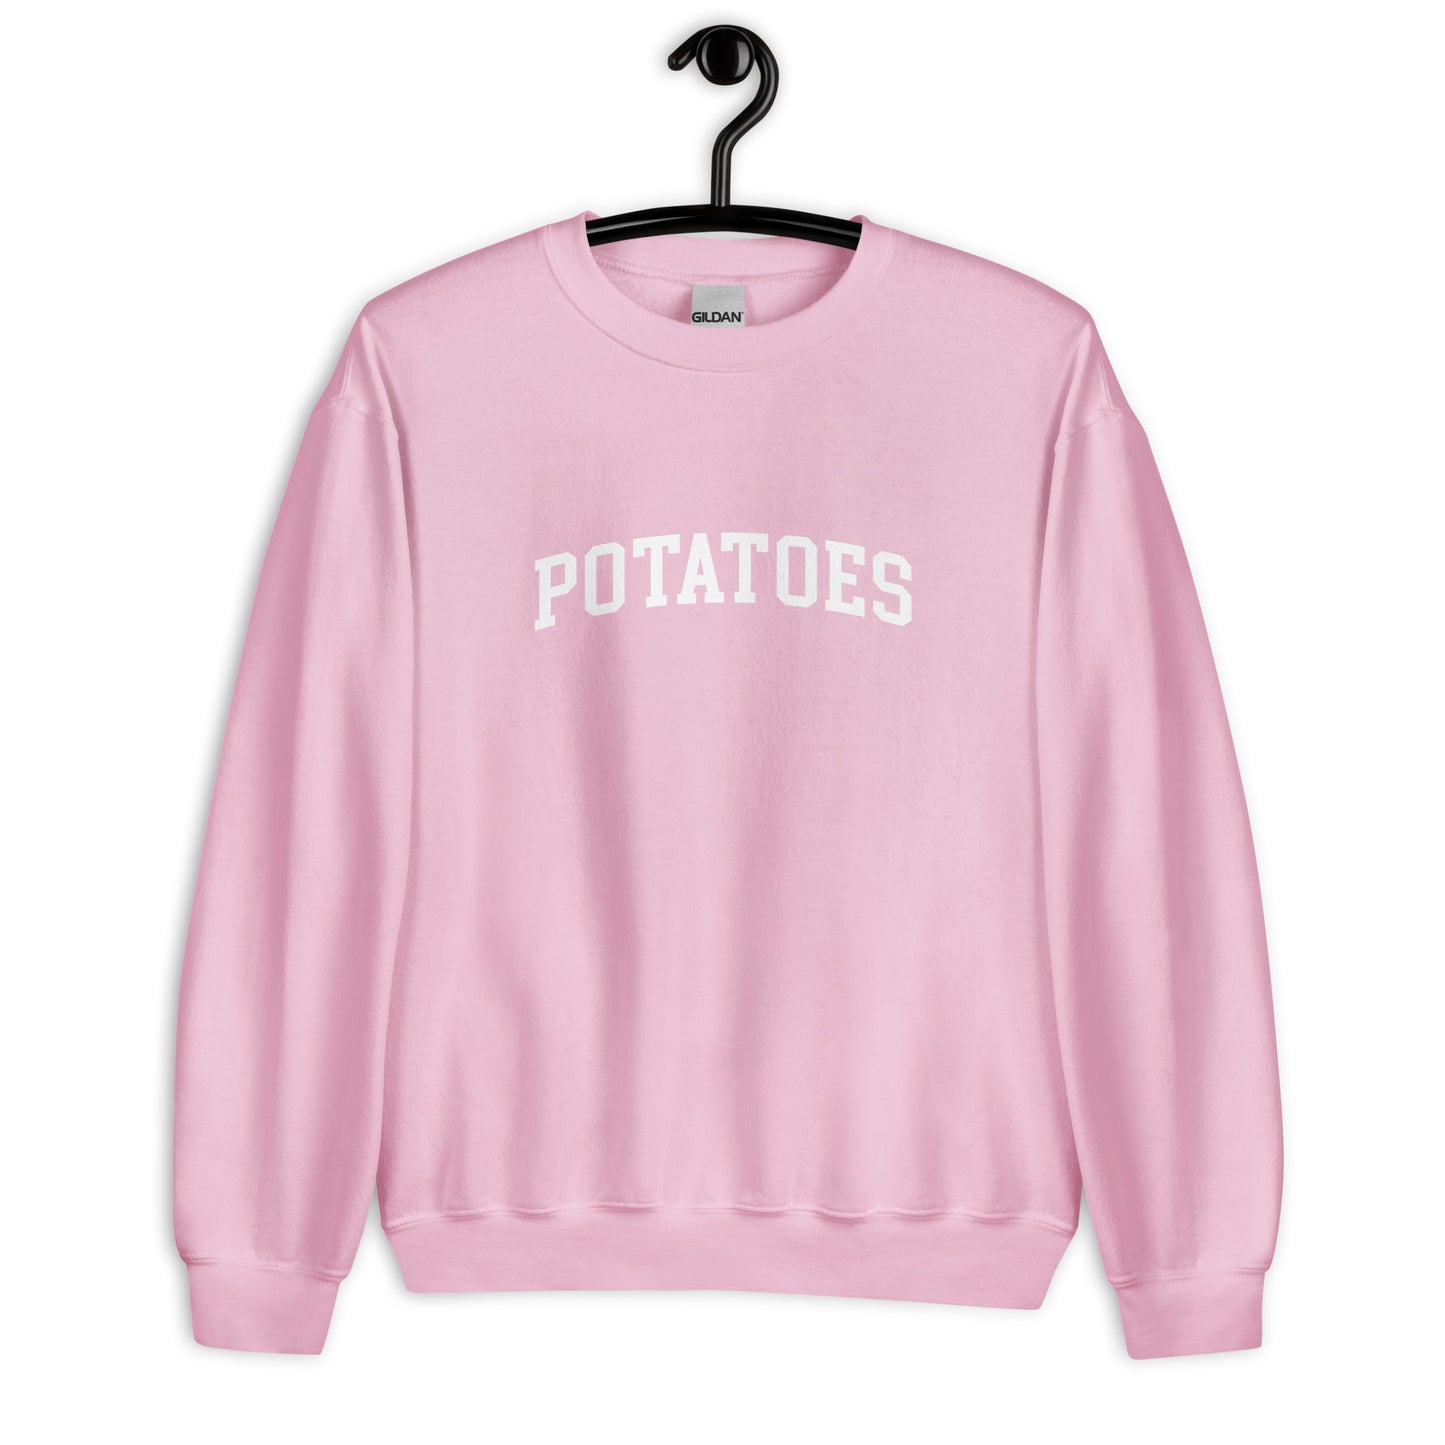 Potatoes Sweatshirt - Arched Font